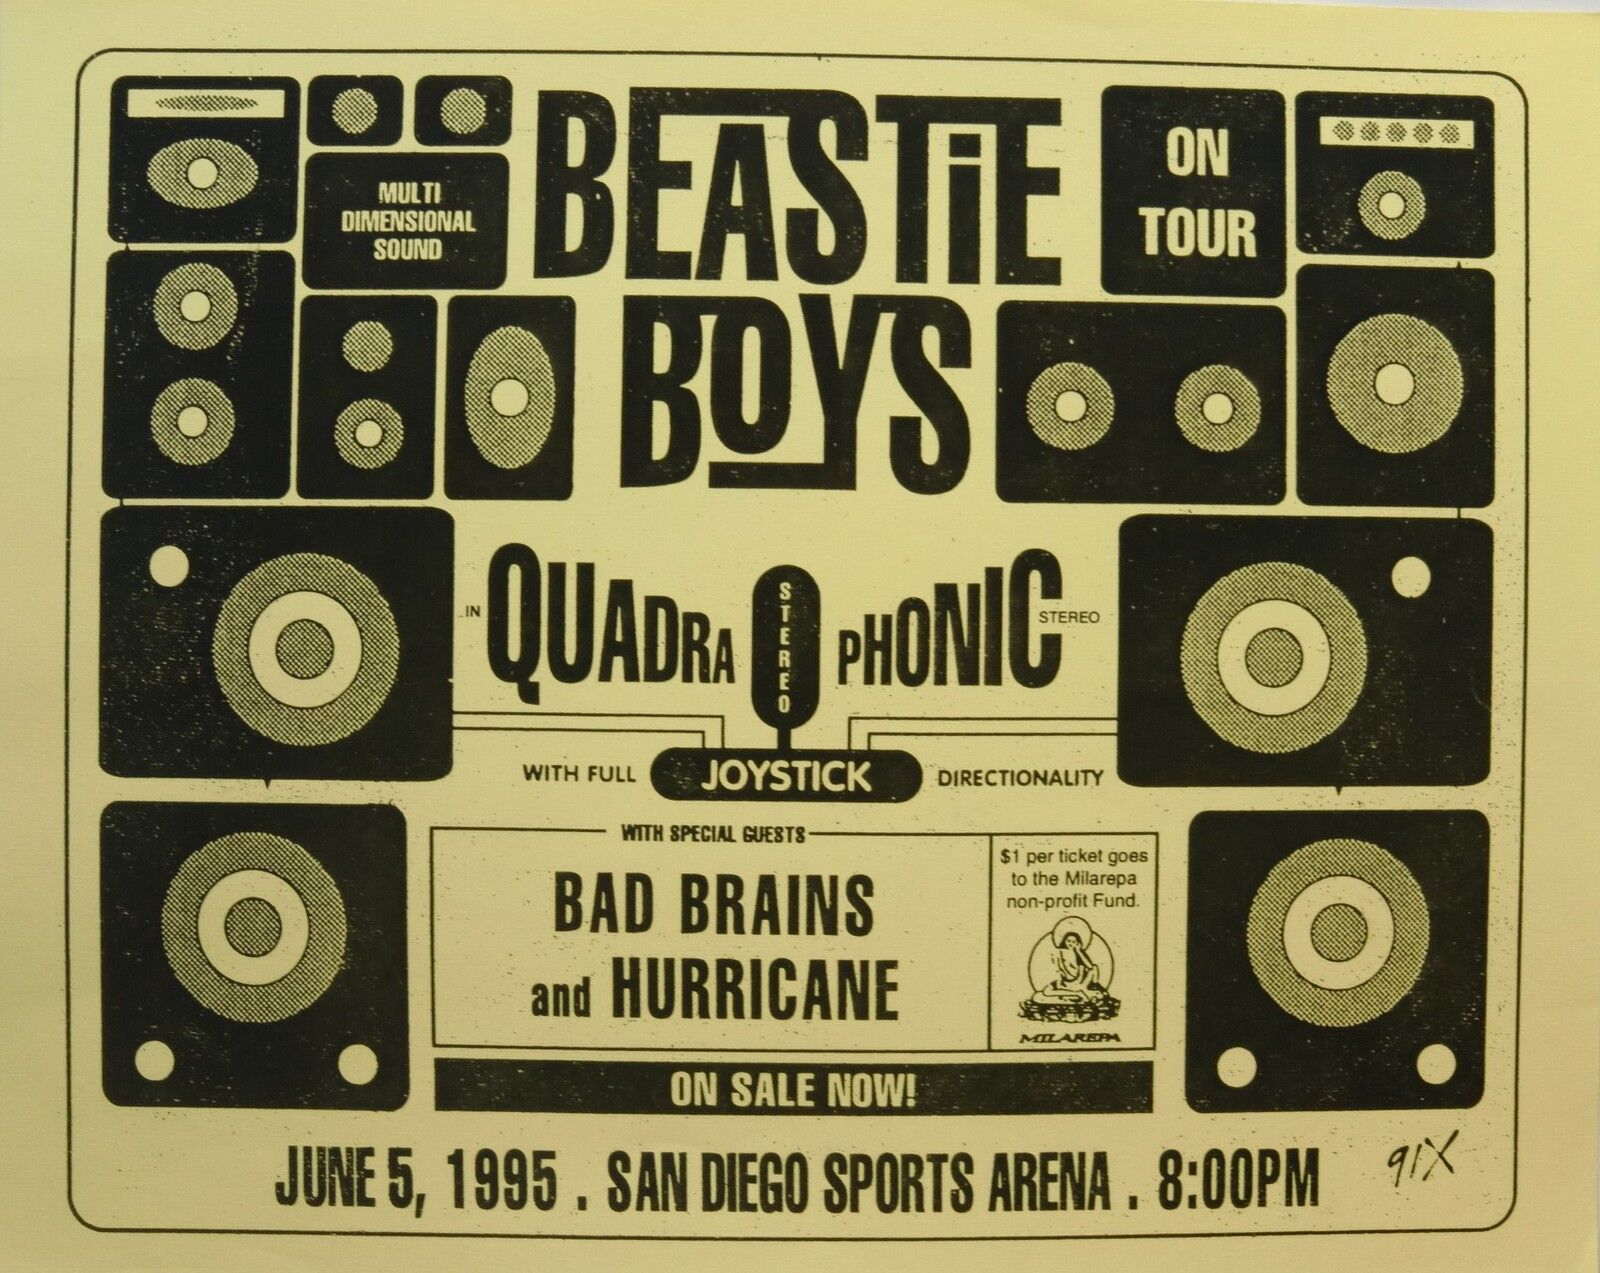 Beastie Boys "quadrophonic Multi Demensional Sound" 1995 San Diego Tour Poster